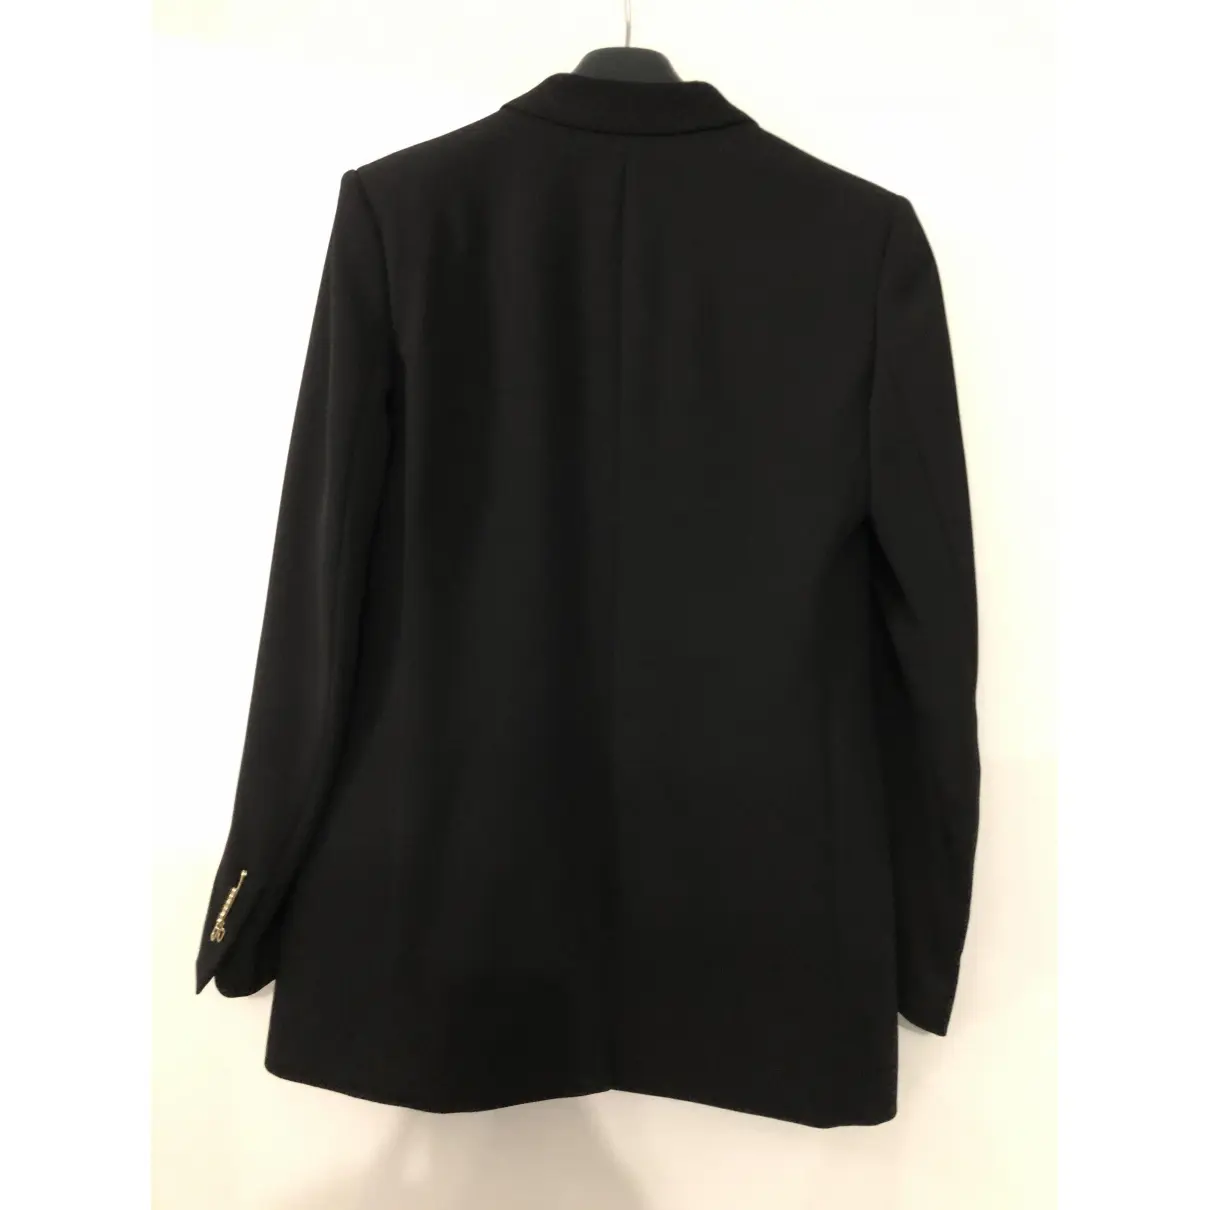 Buy The Kooples Black Polyester Jacket Spring Summer 2020 online